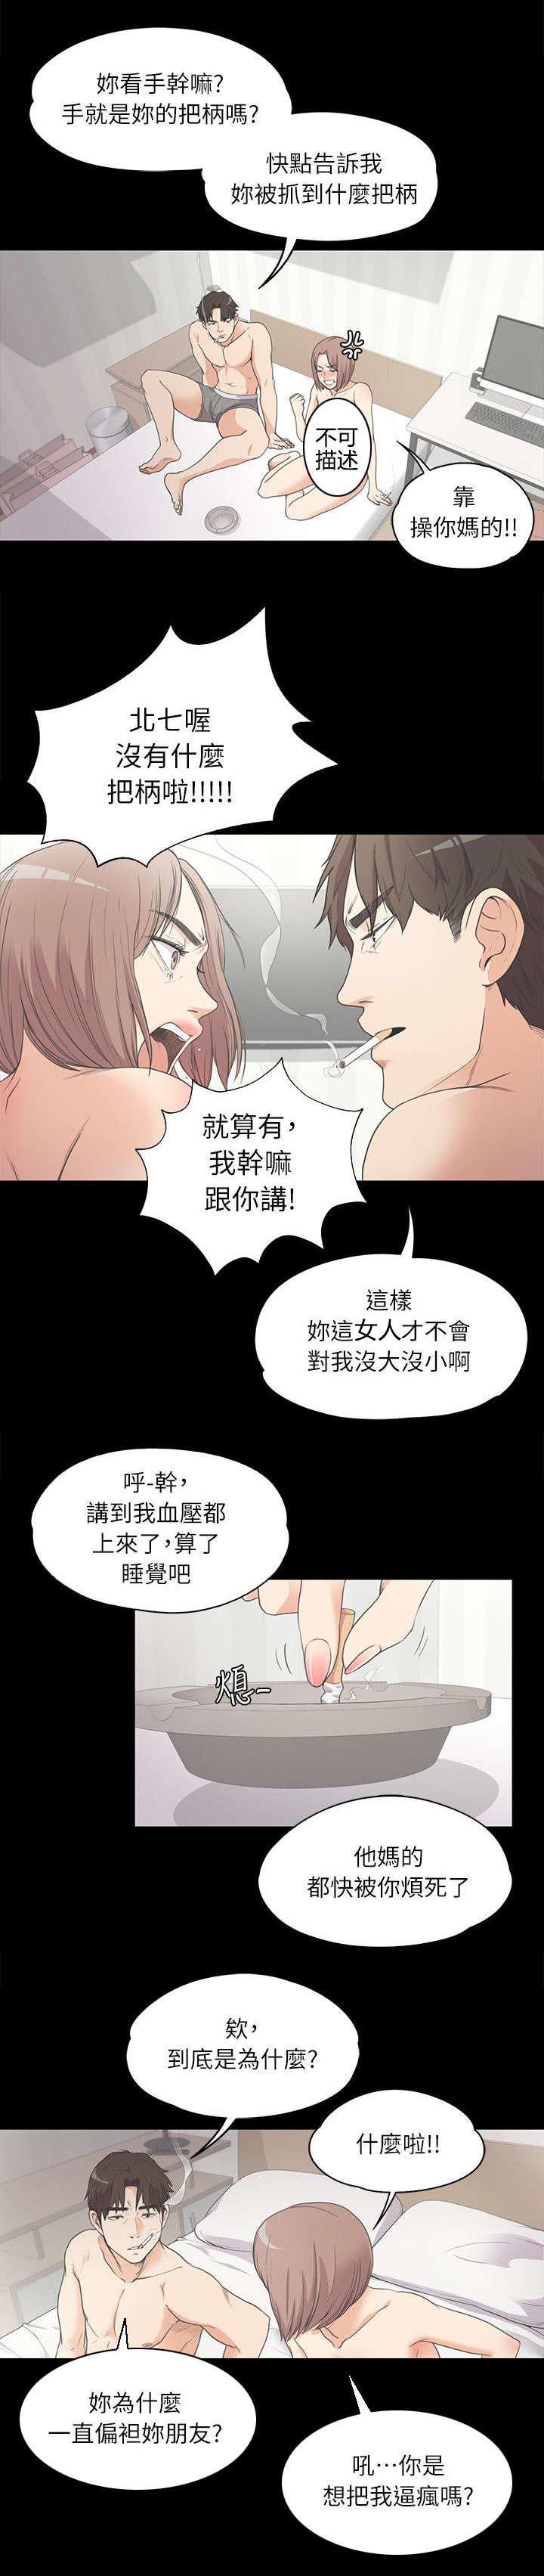 qq飞车漫画-14_偏袒全彩韩漫标签